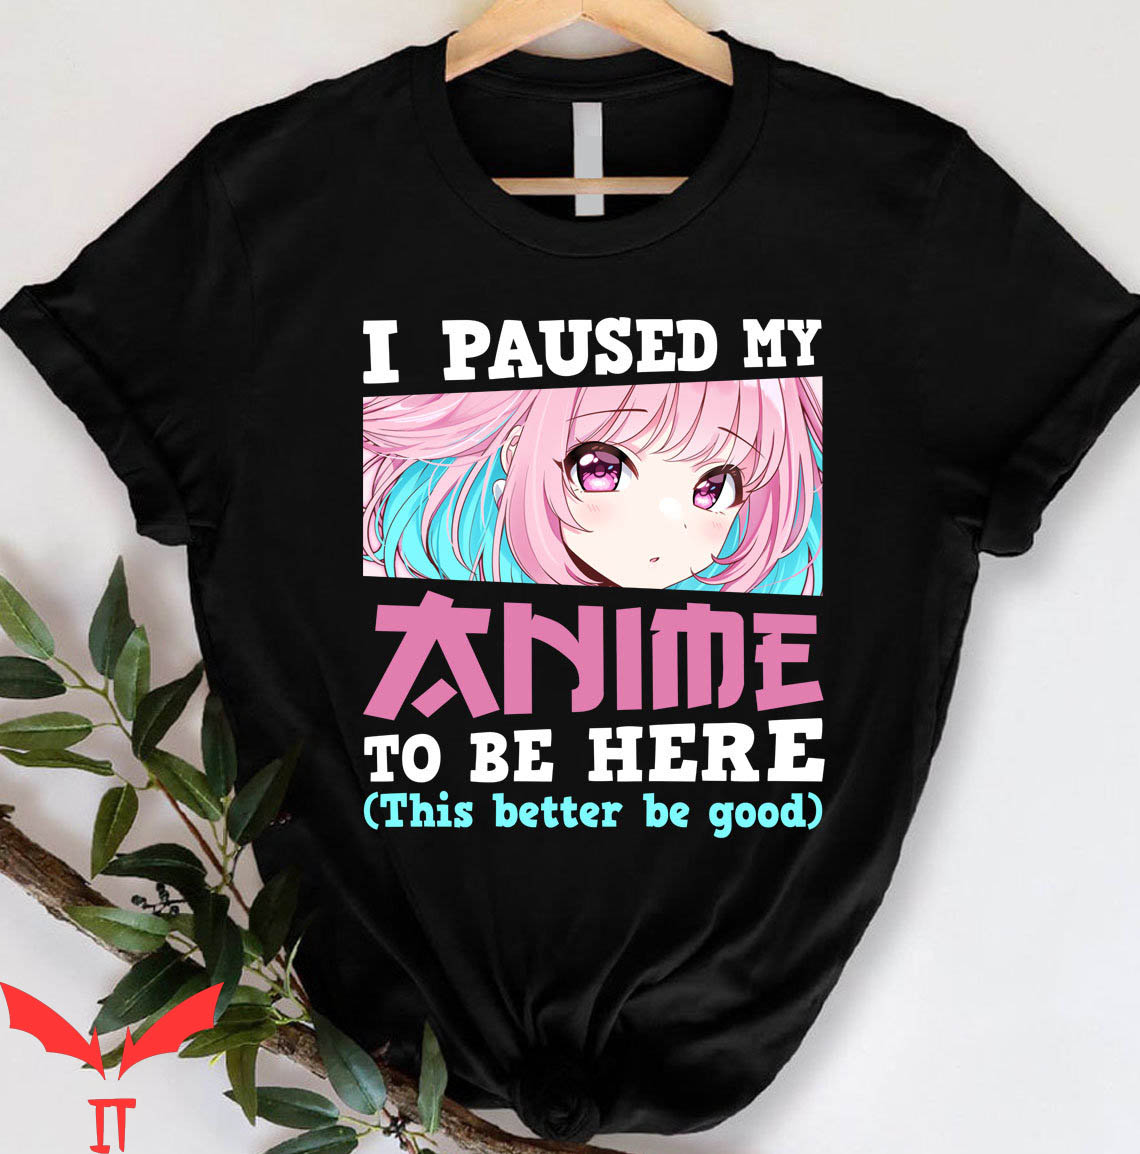 Amazoncom Im An Otaku Shirt Anime Lover TShirt for Weeaboo Trash Tee   Clothing Shoes  Jewelry